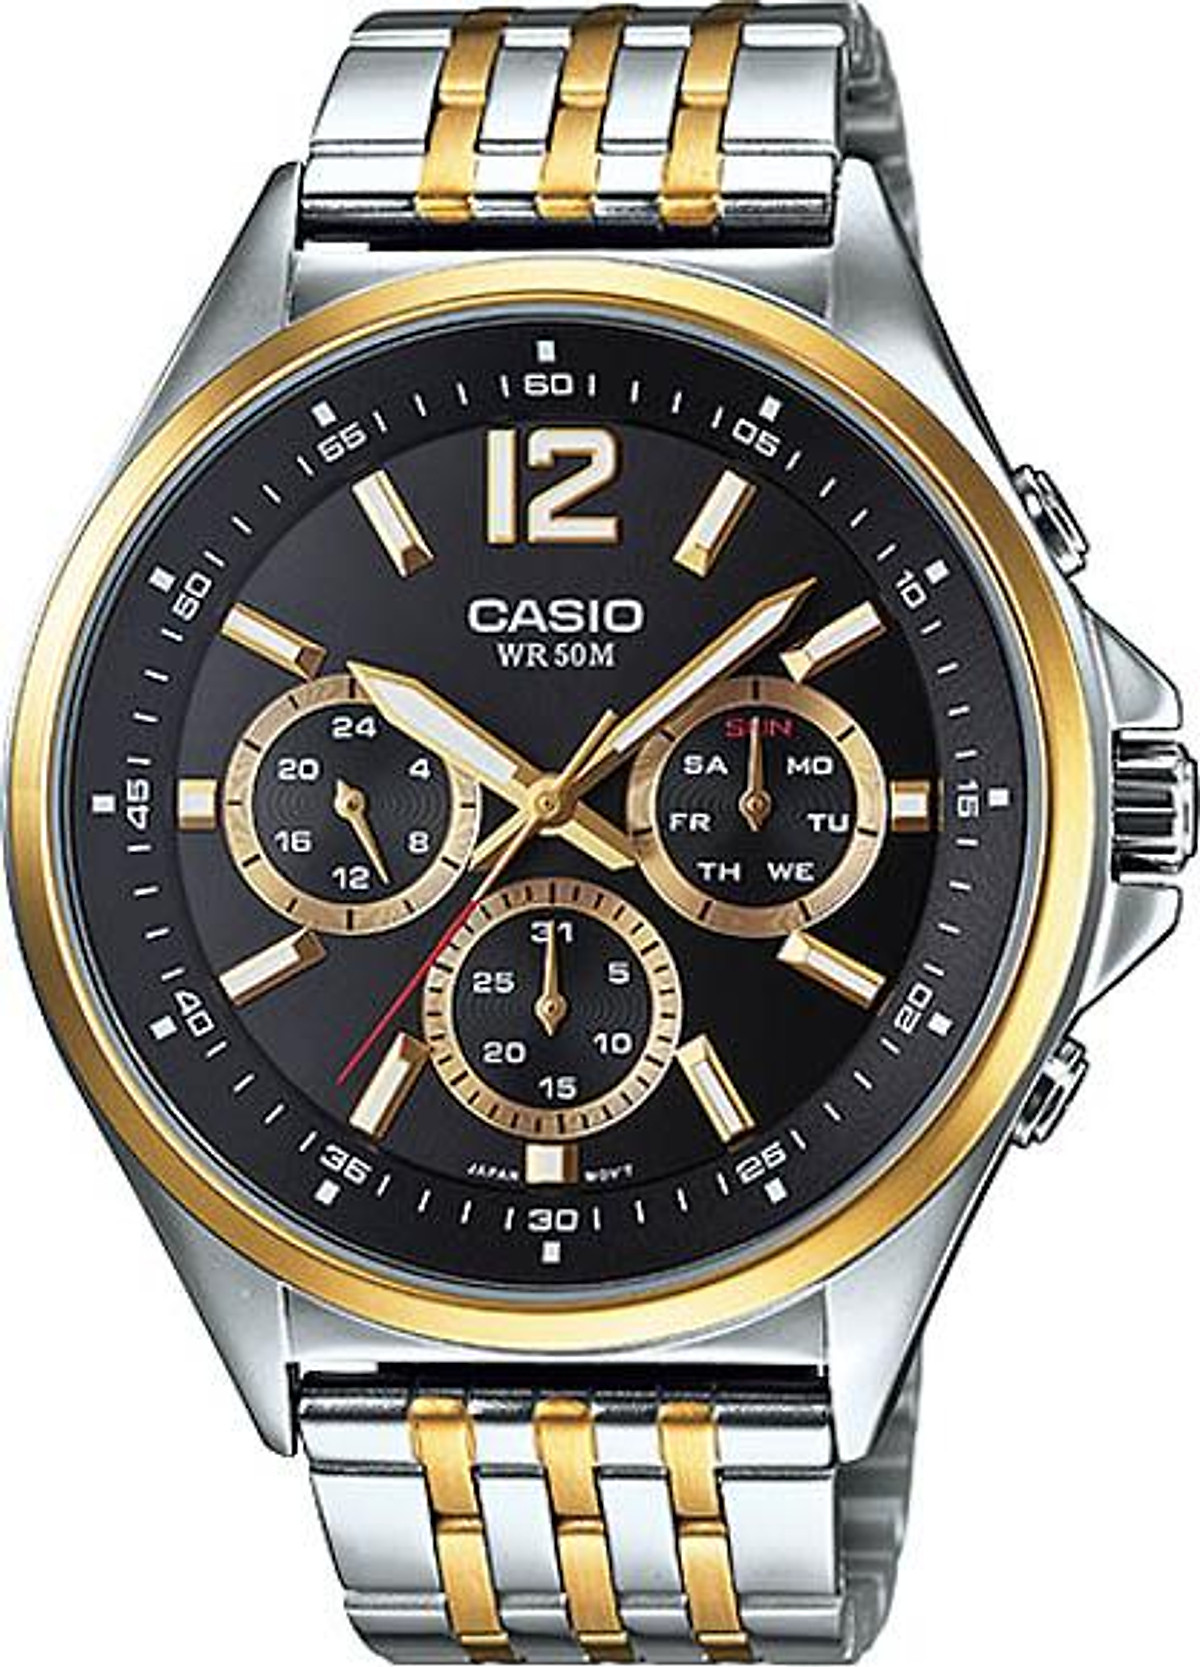 Khám phá đồng hồ Casio MTP-E303SG-1AVDF